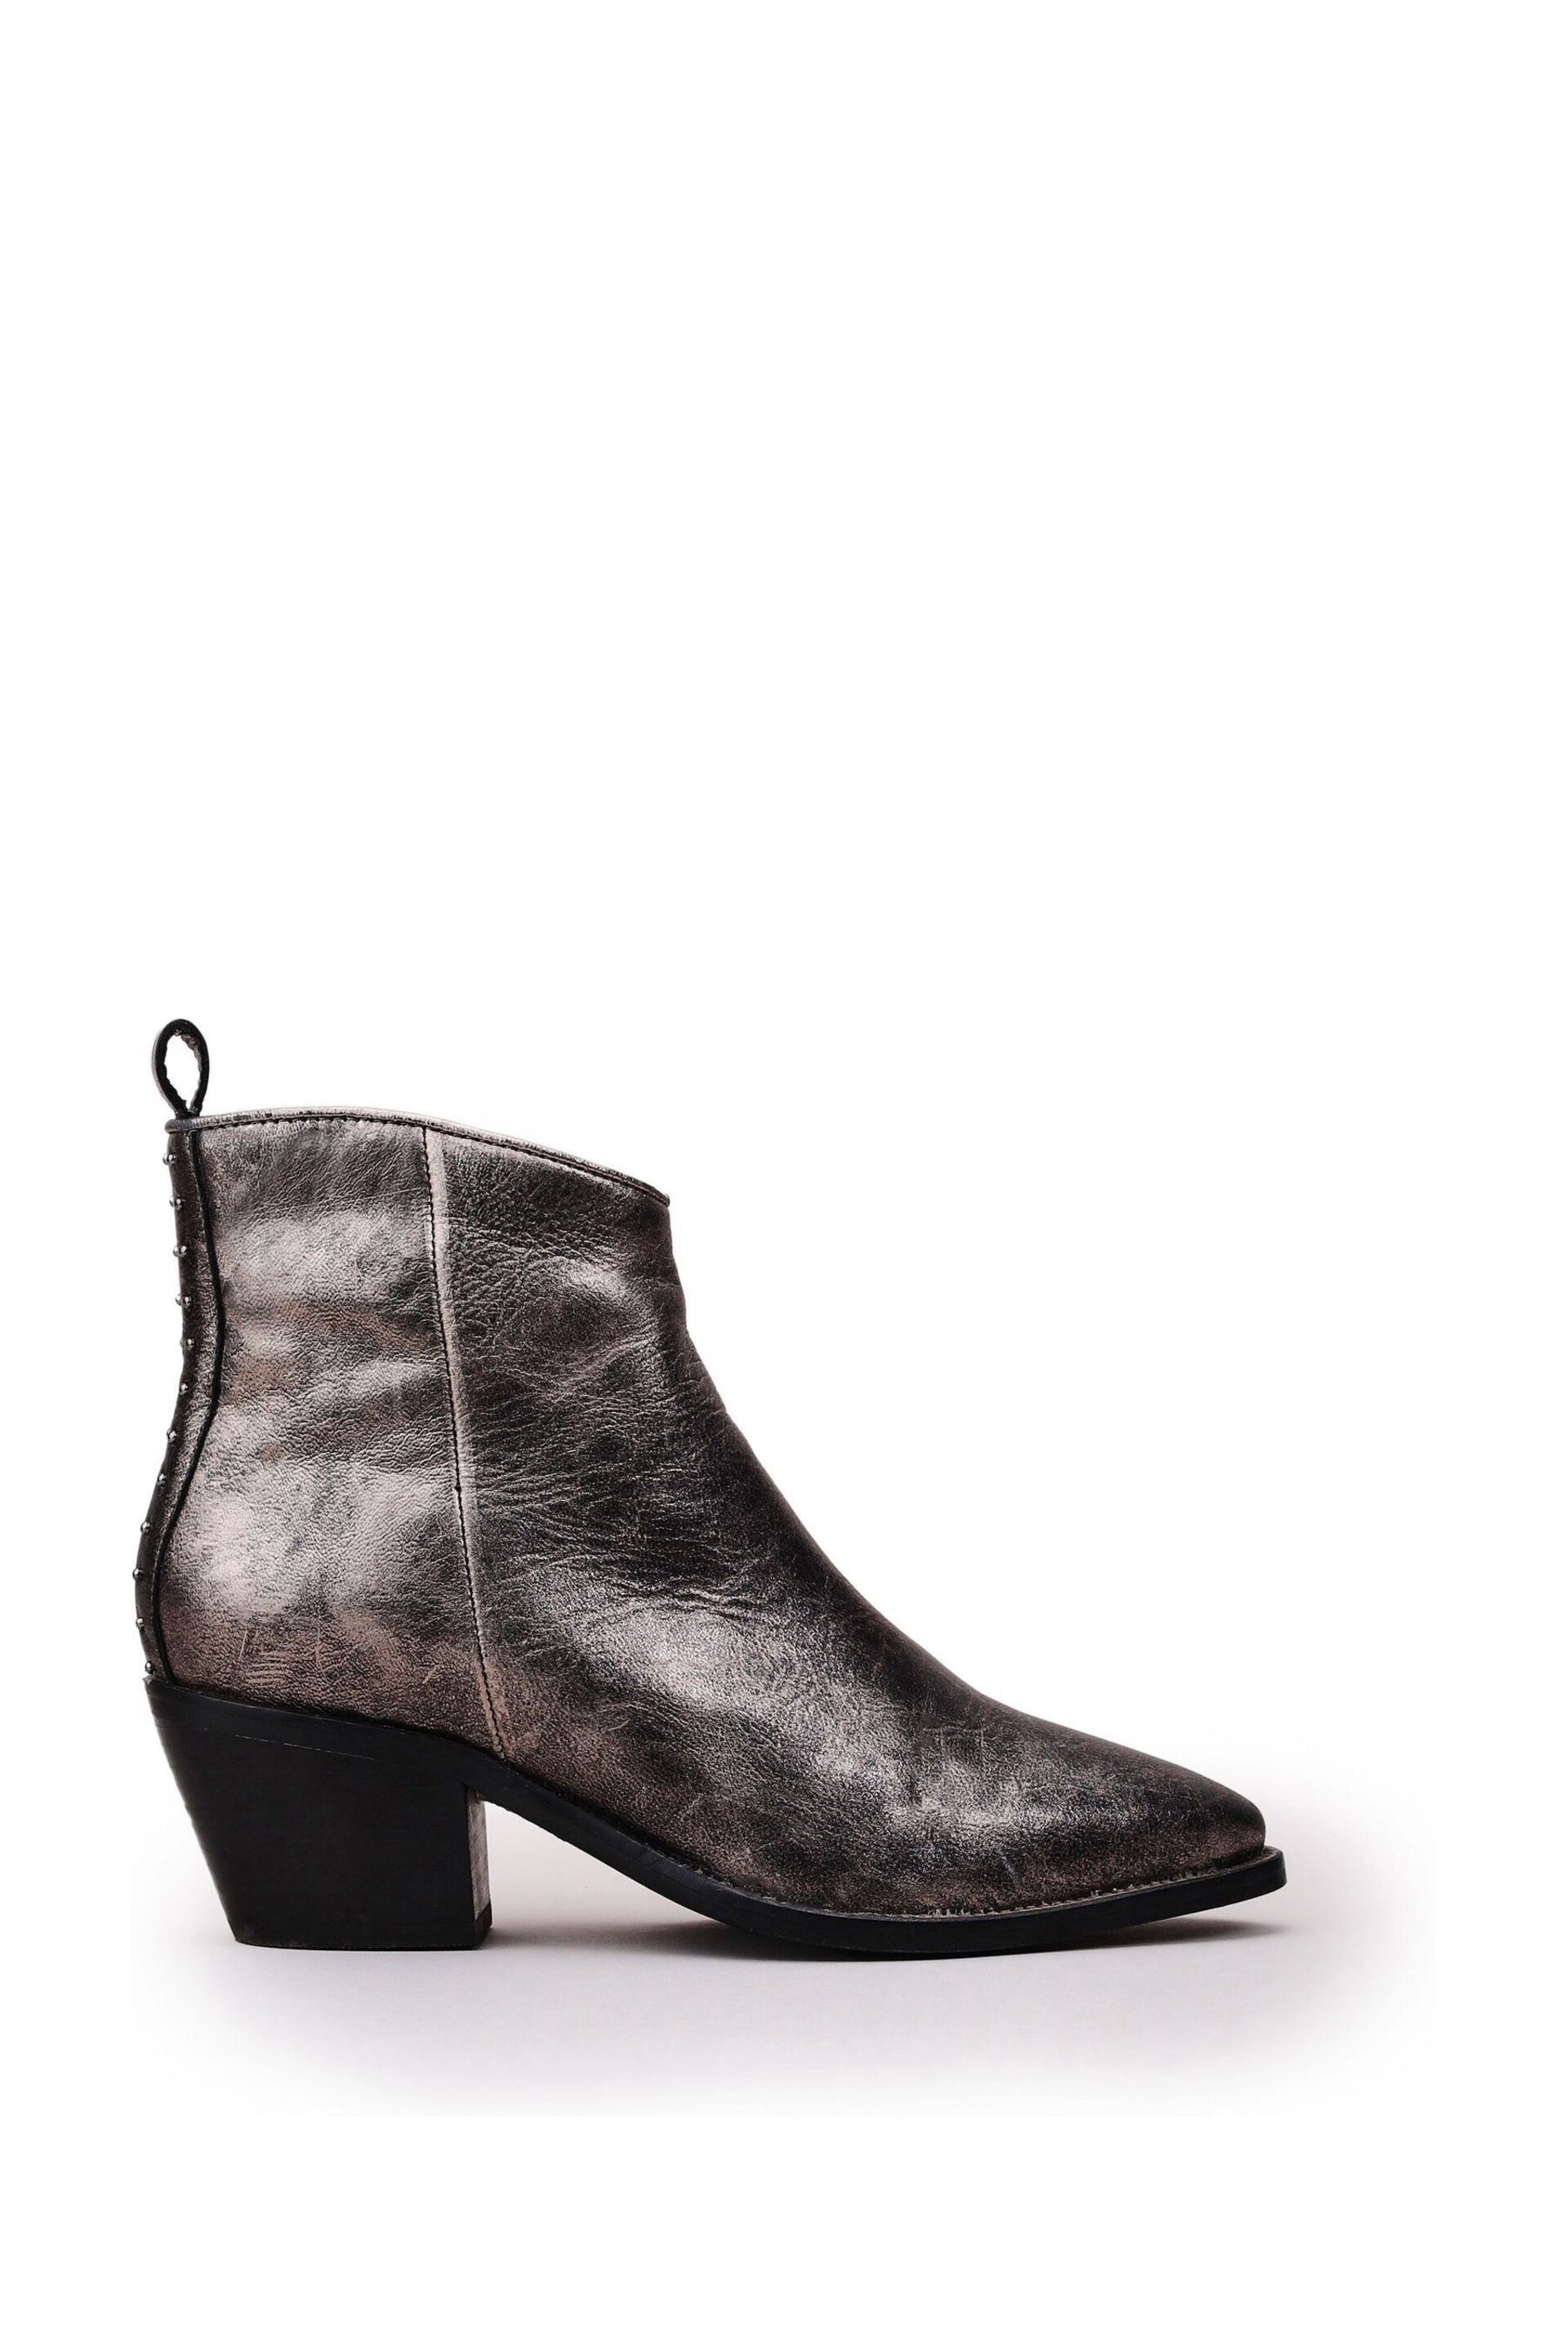 Moda In Pelle Metallic Western Boots - Image 2 of 5